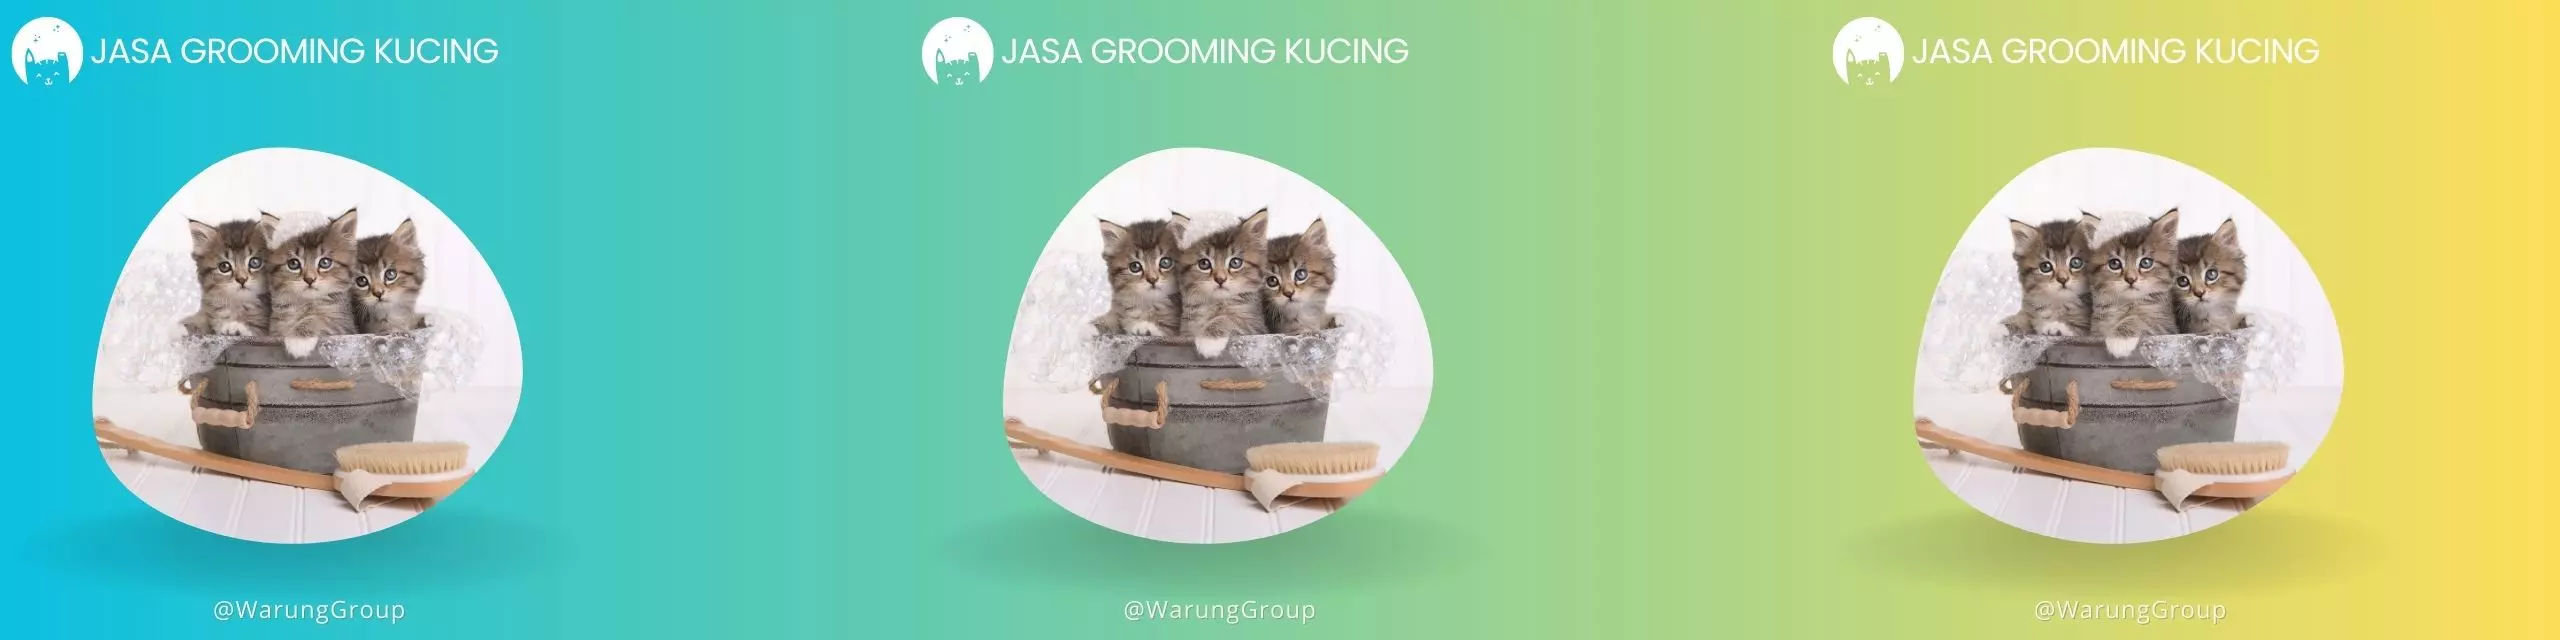 Jasa Grooming Kucing